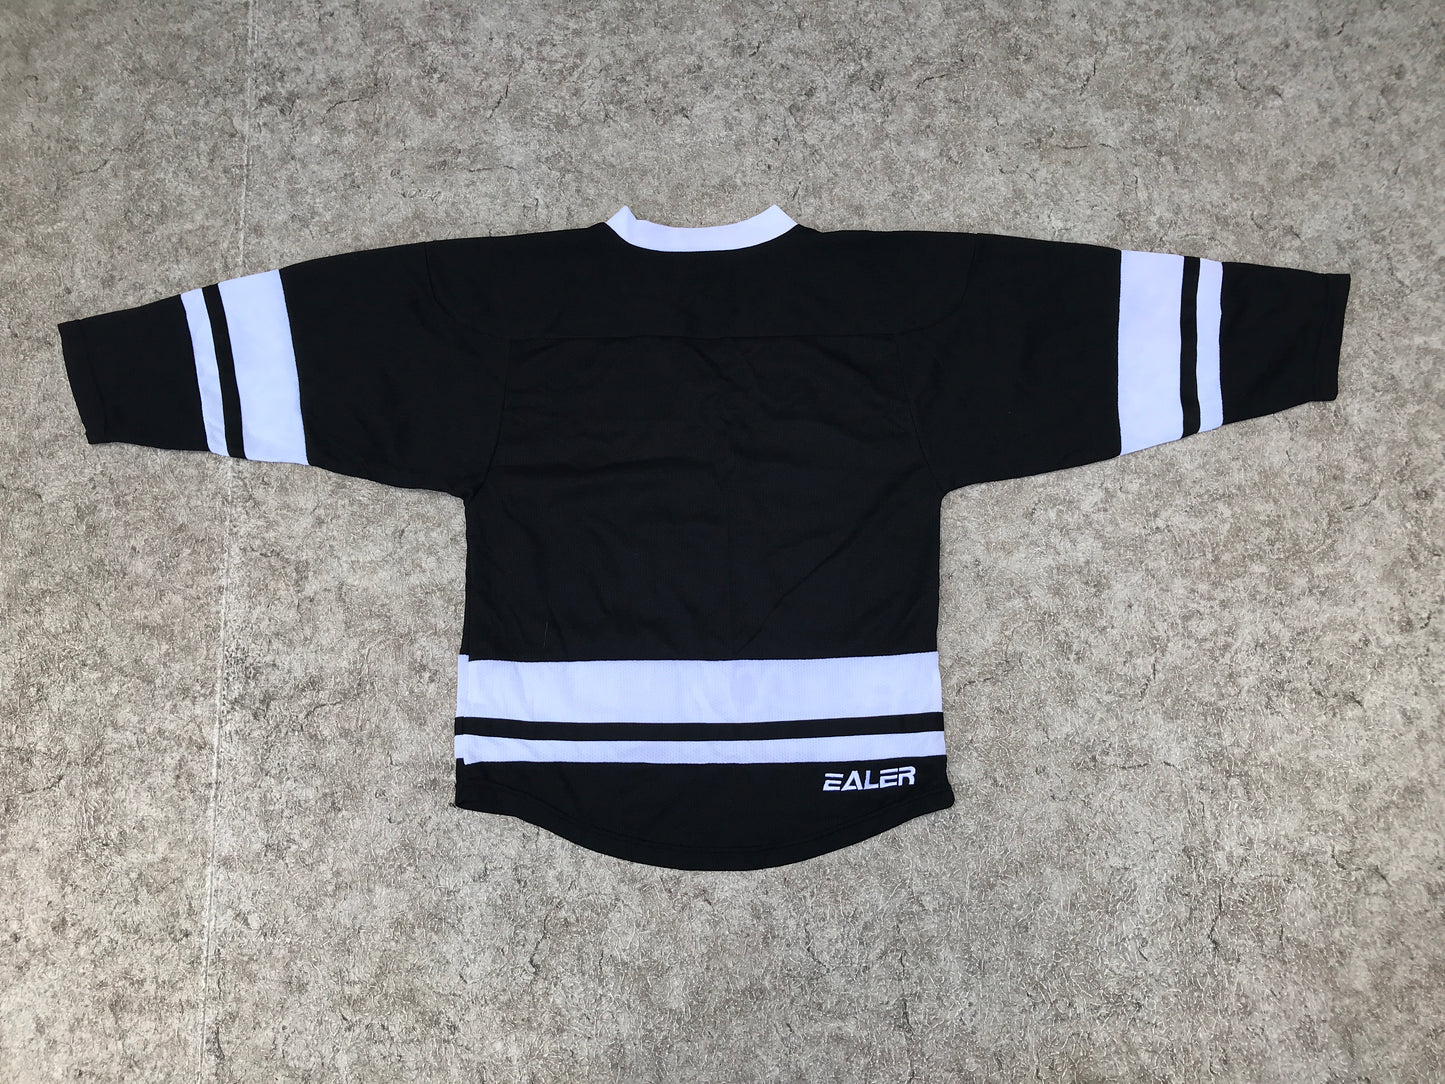 Hockey Child Size 7-8 Practic Jersey Black White New